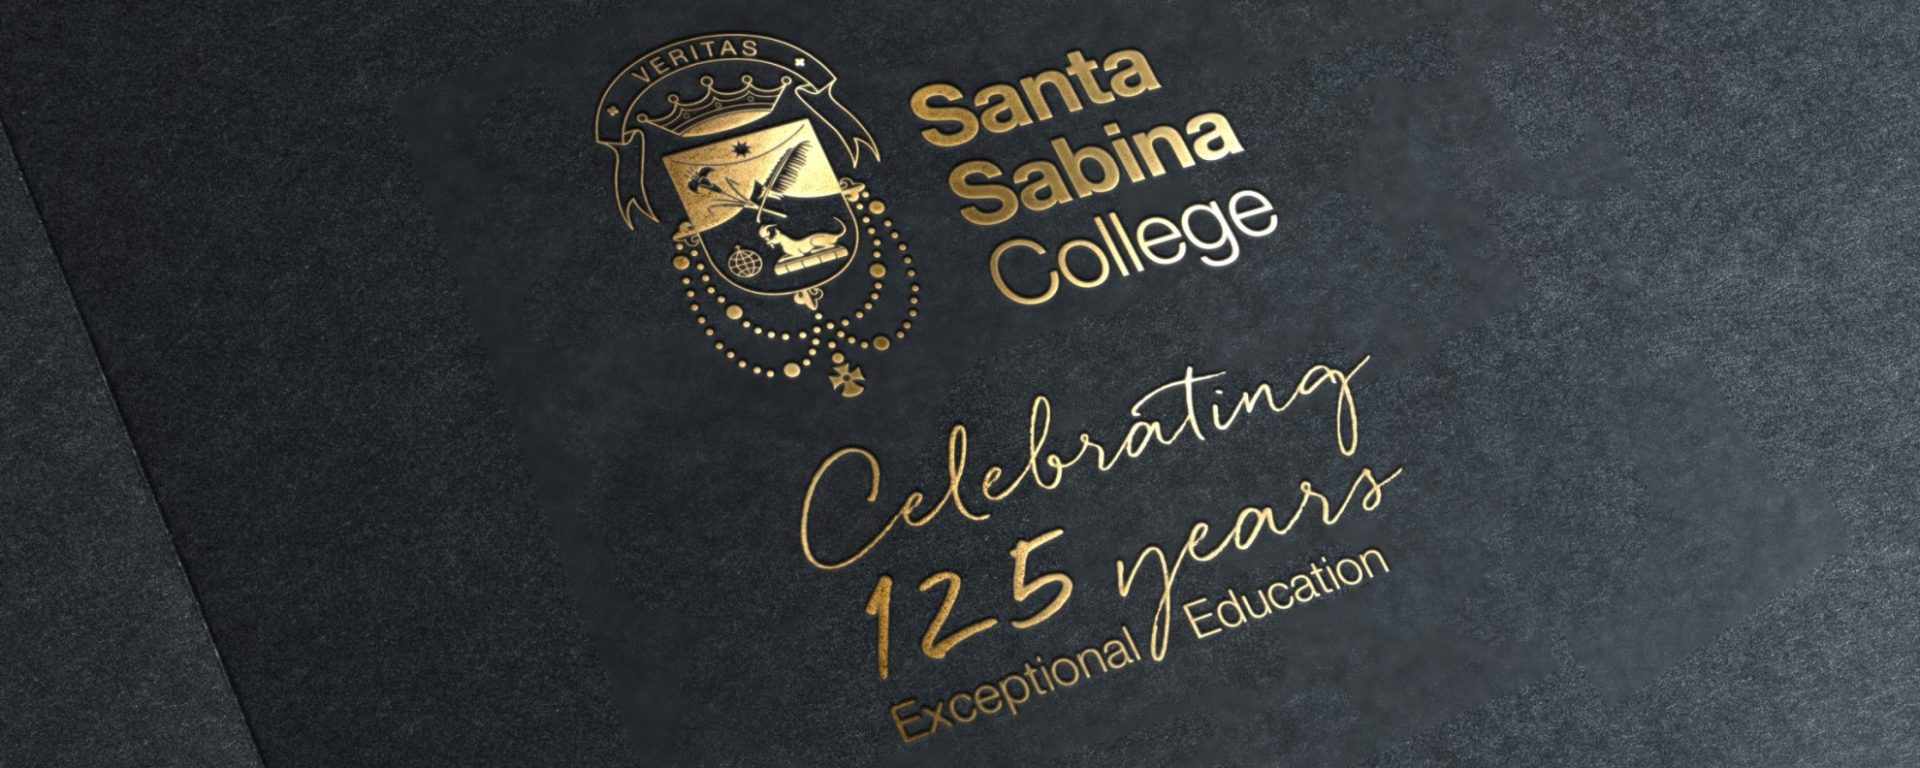 125 Years – Santa Sabina College featured image